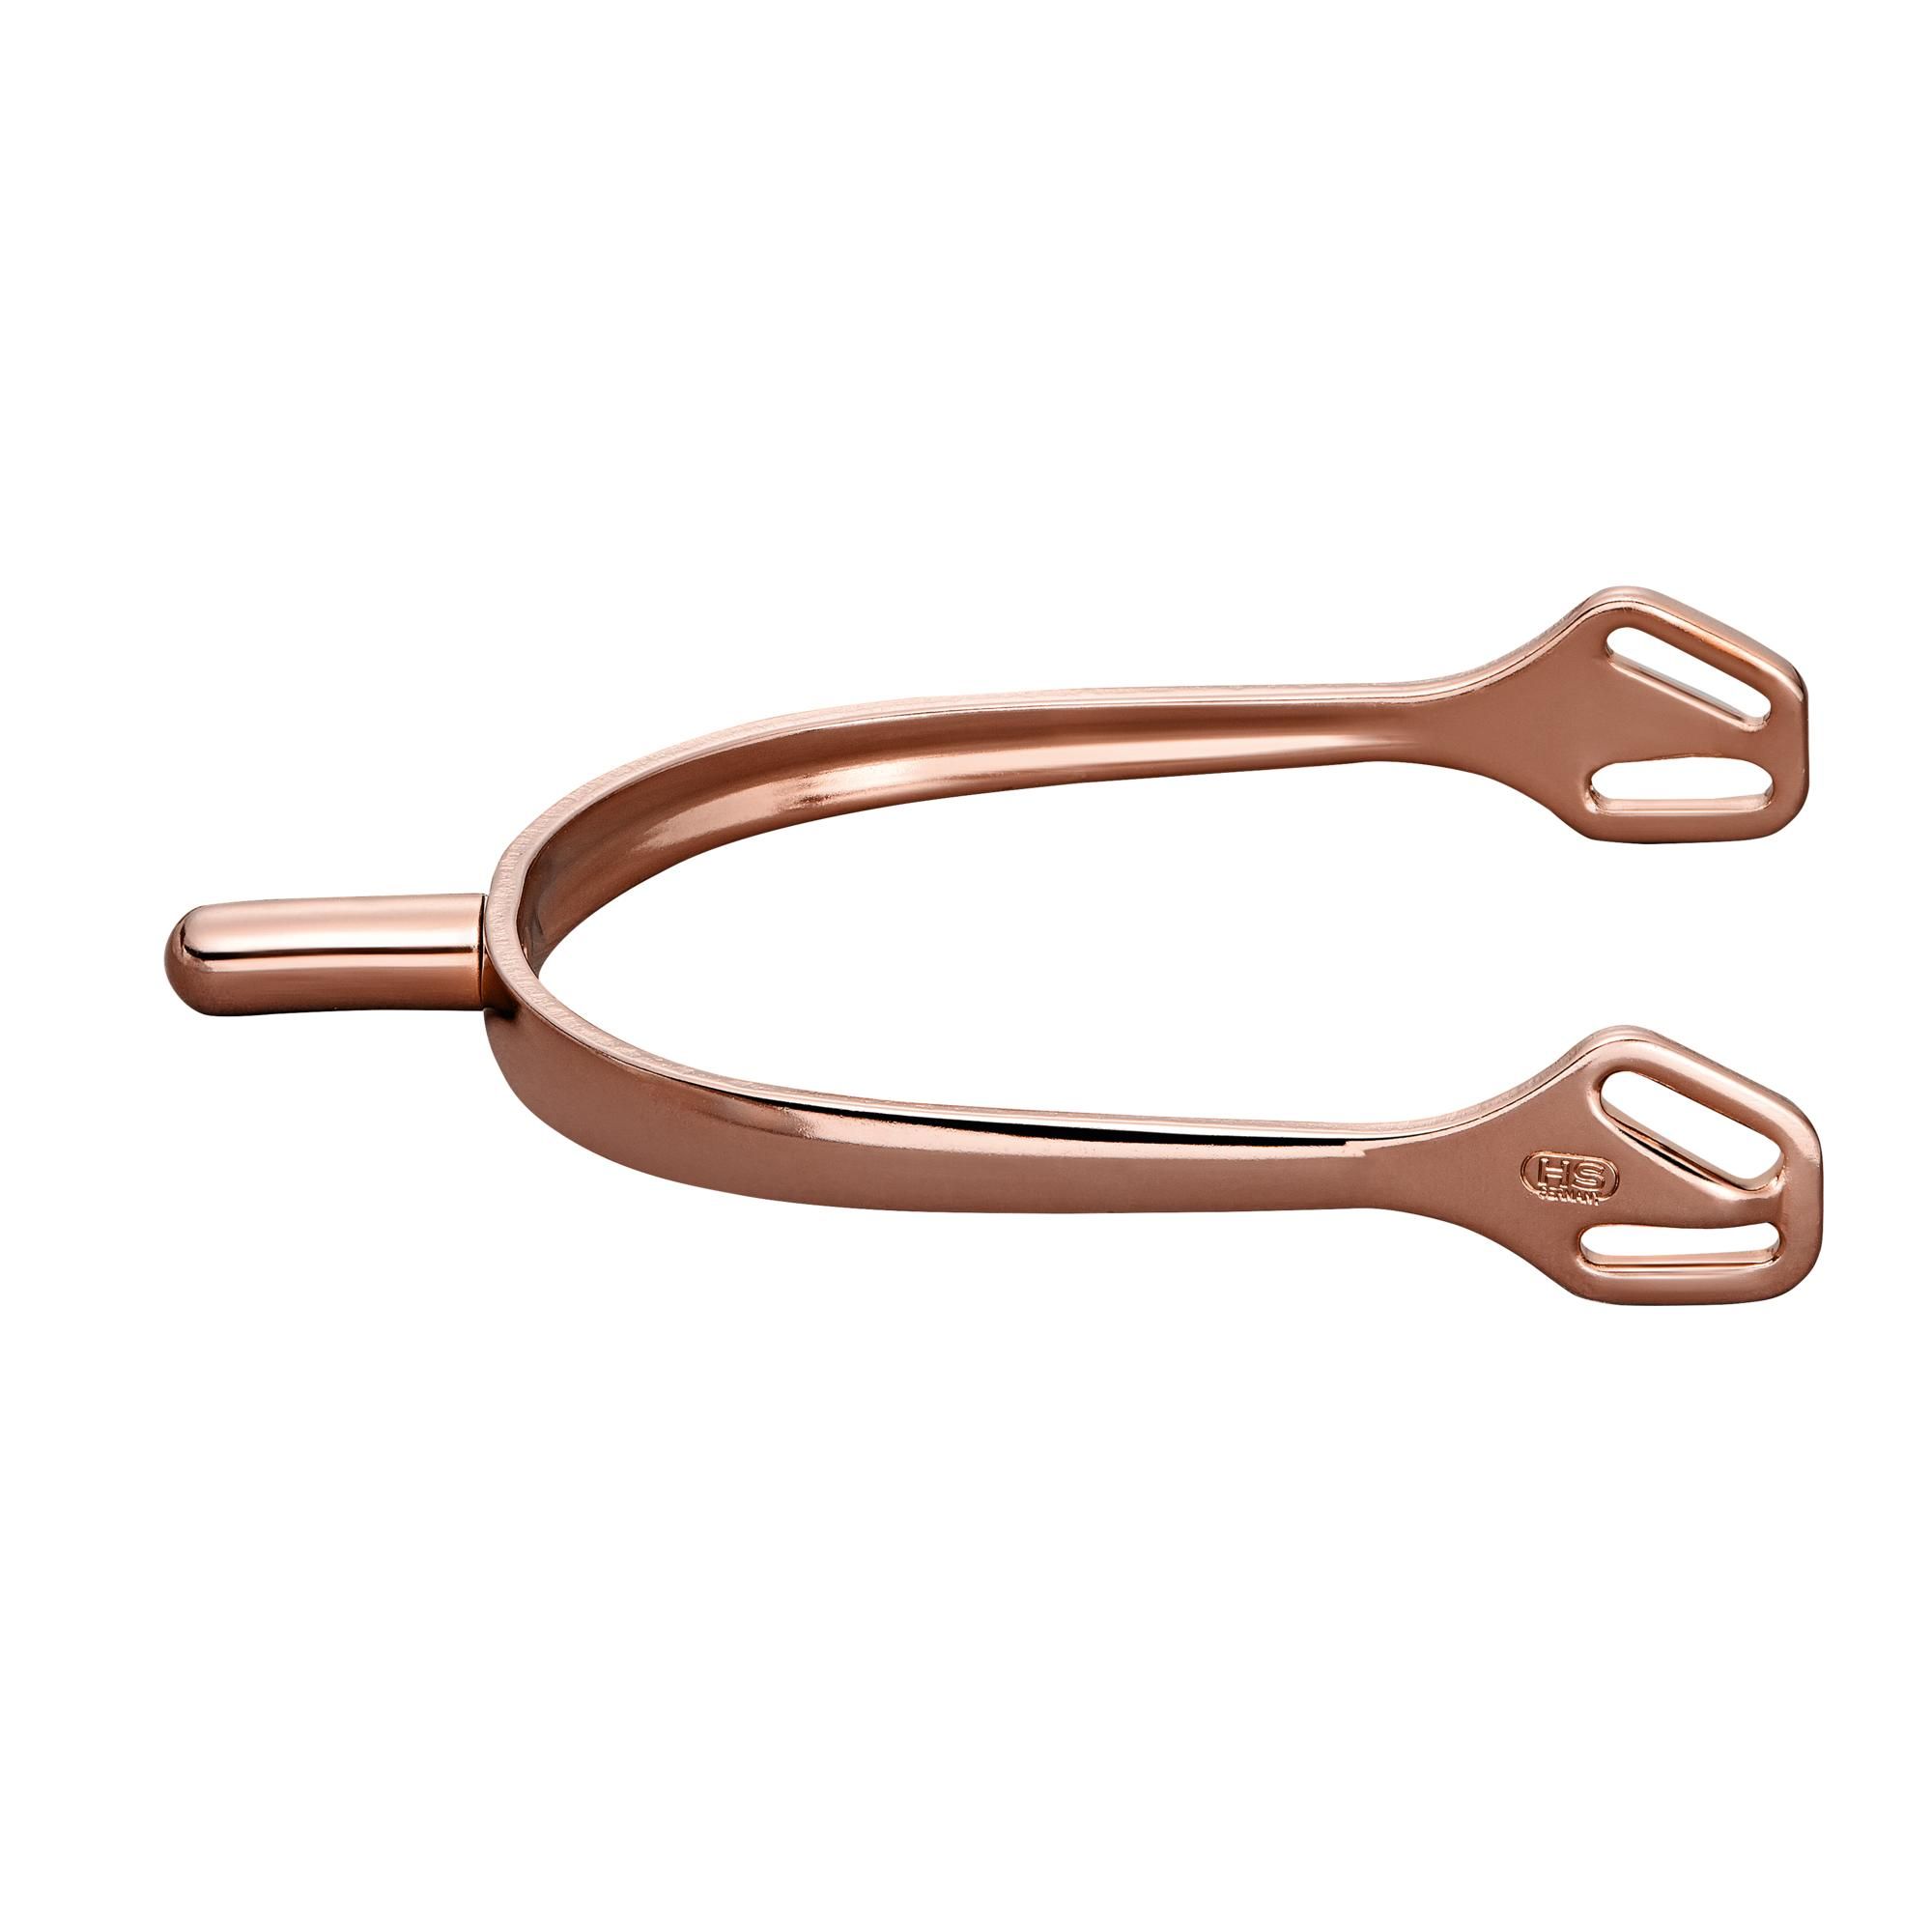 ULTRA fit Sporen - Edelstahl rostfrei bronze, 25 mm, abgerundet